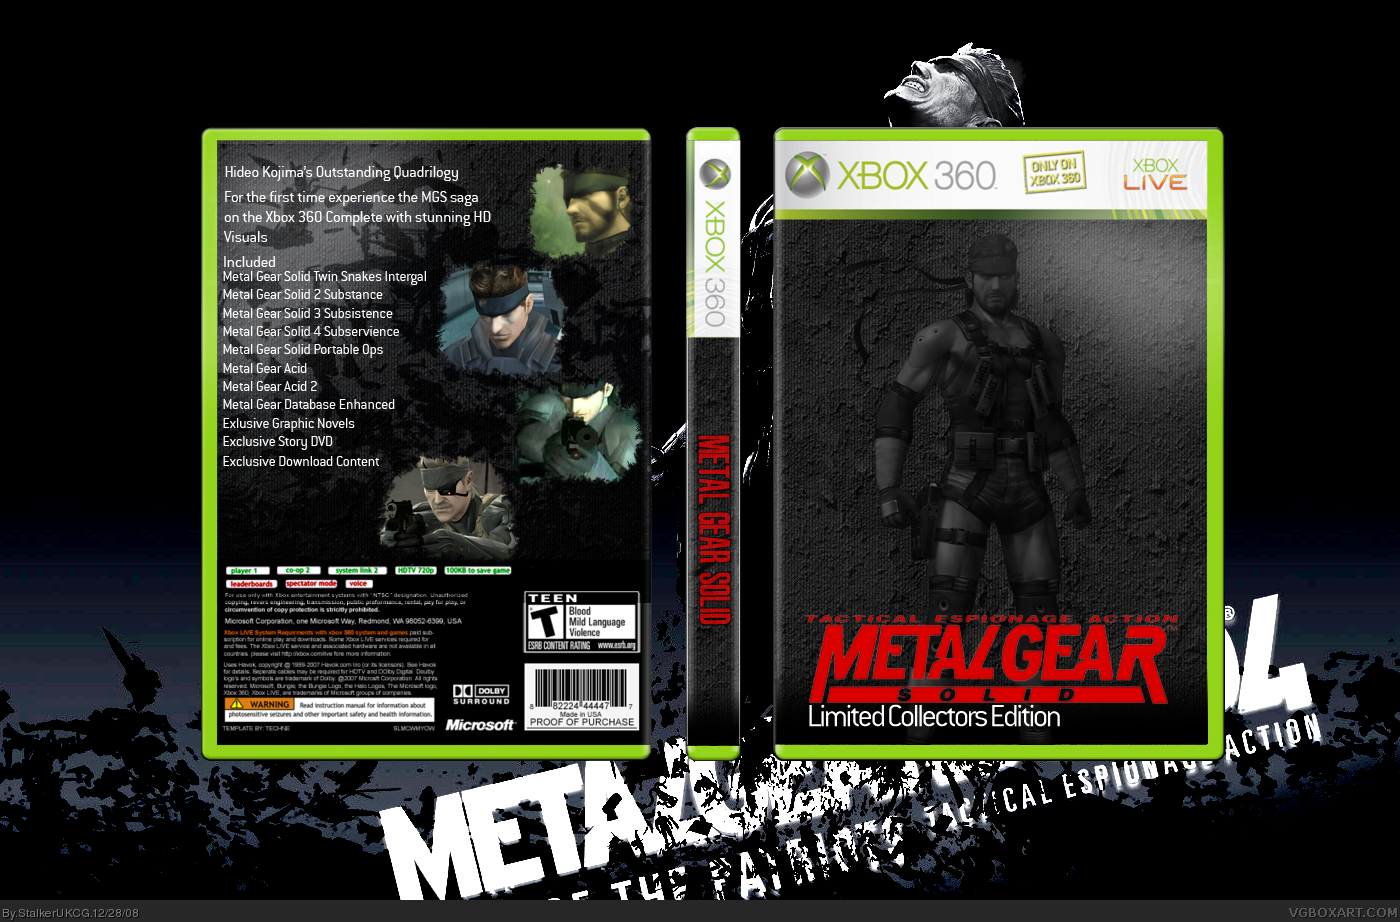 Metal Gear Solid Saga, Limited Collectors Edition box cover